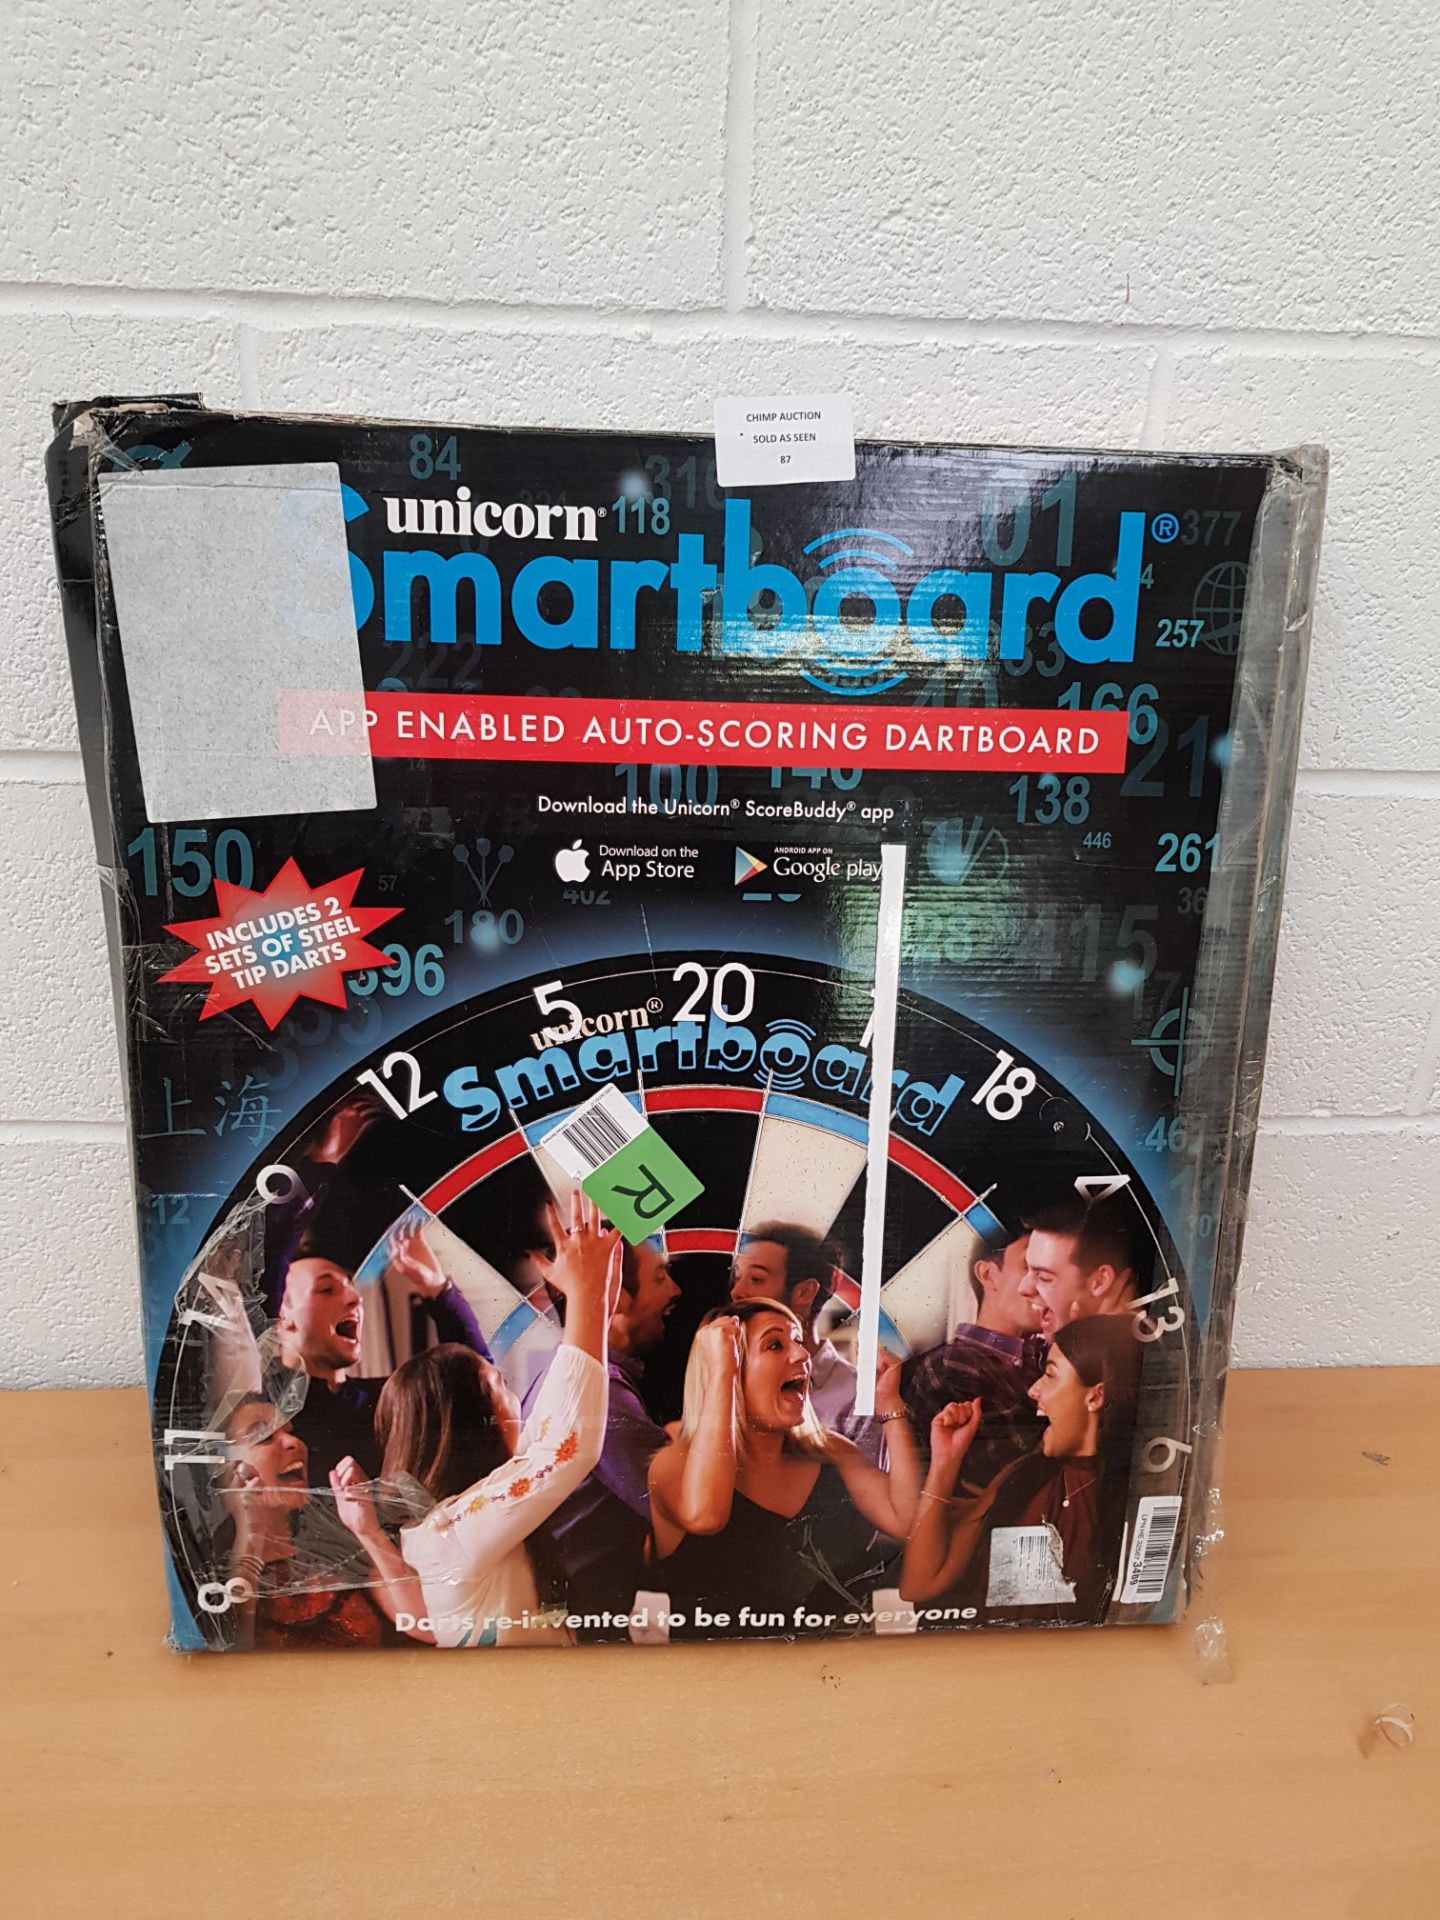 Unicorn Darts App Enabled Smartboard Bristle Dartboard RRP £229.99